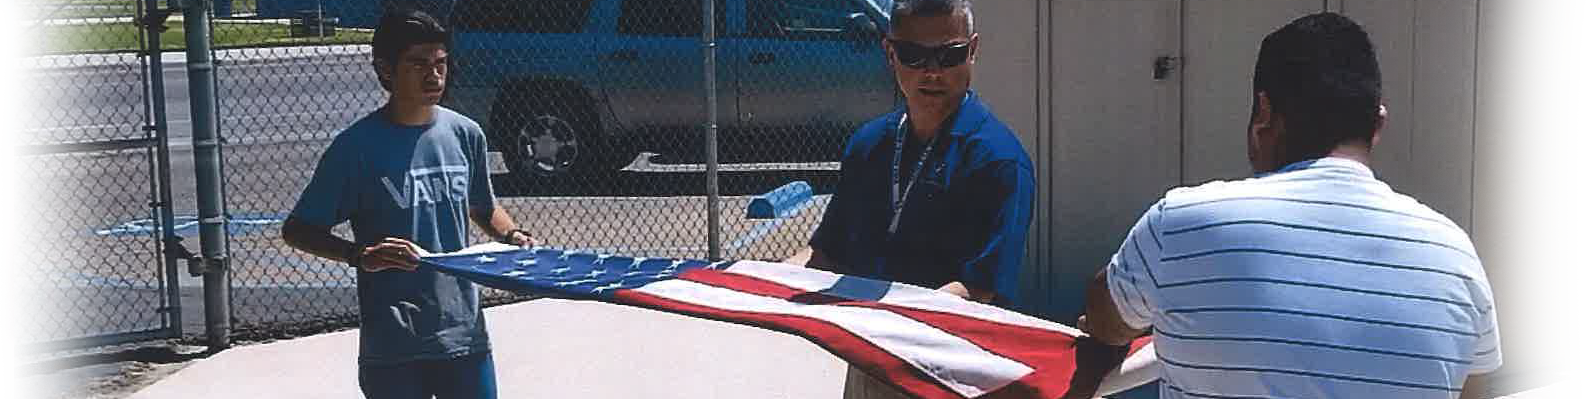 Folding the American flag